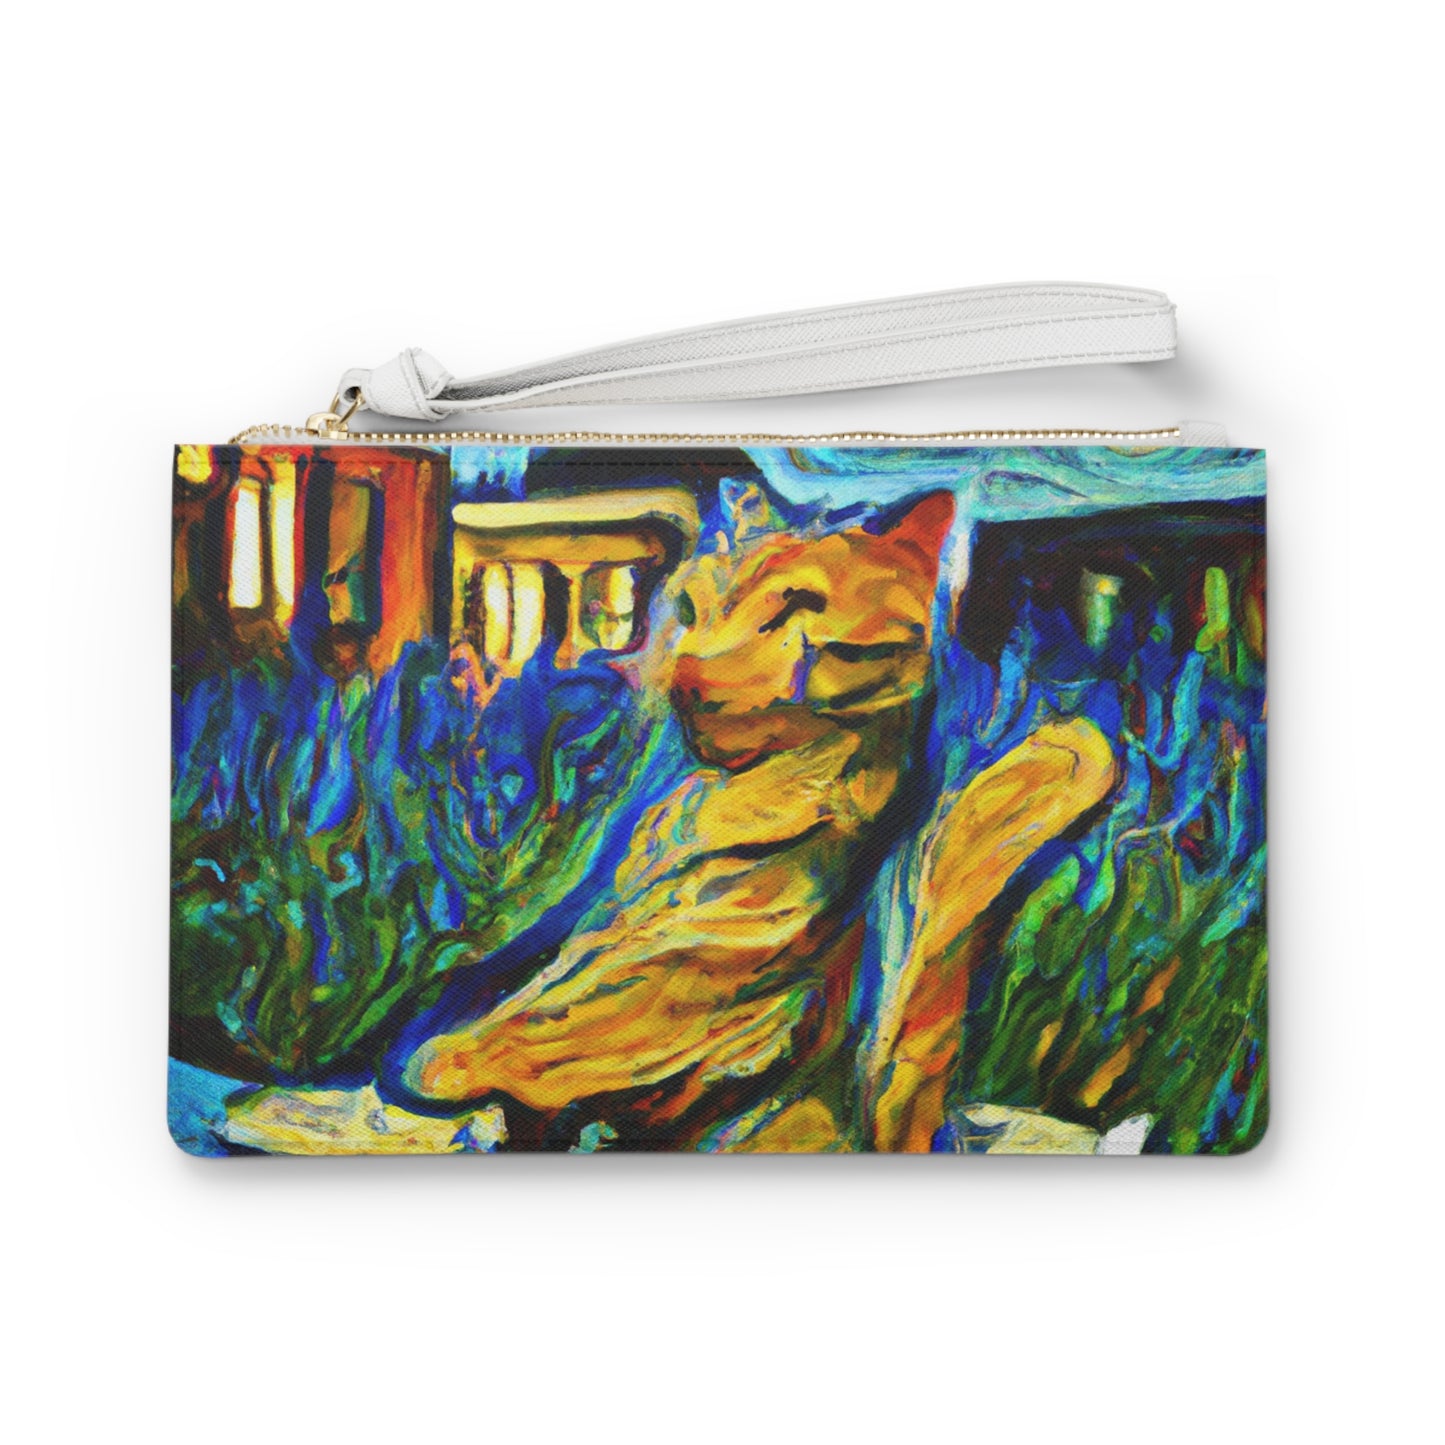 "A Cat Amongst the Celestial Tea Leaves" - The Alien Clutch Bag